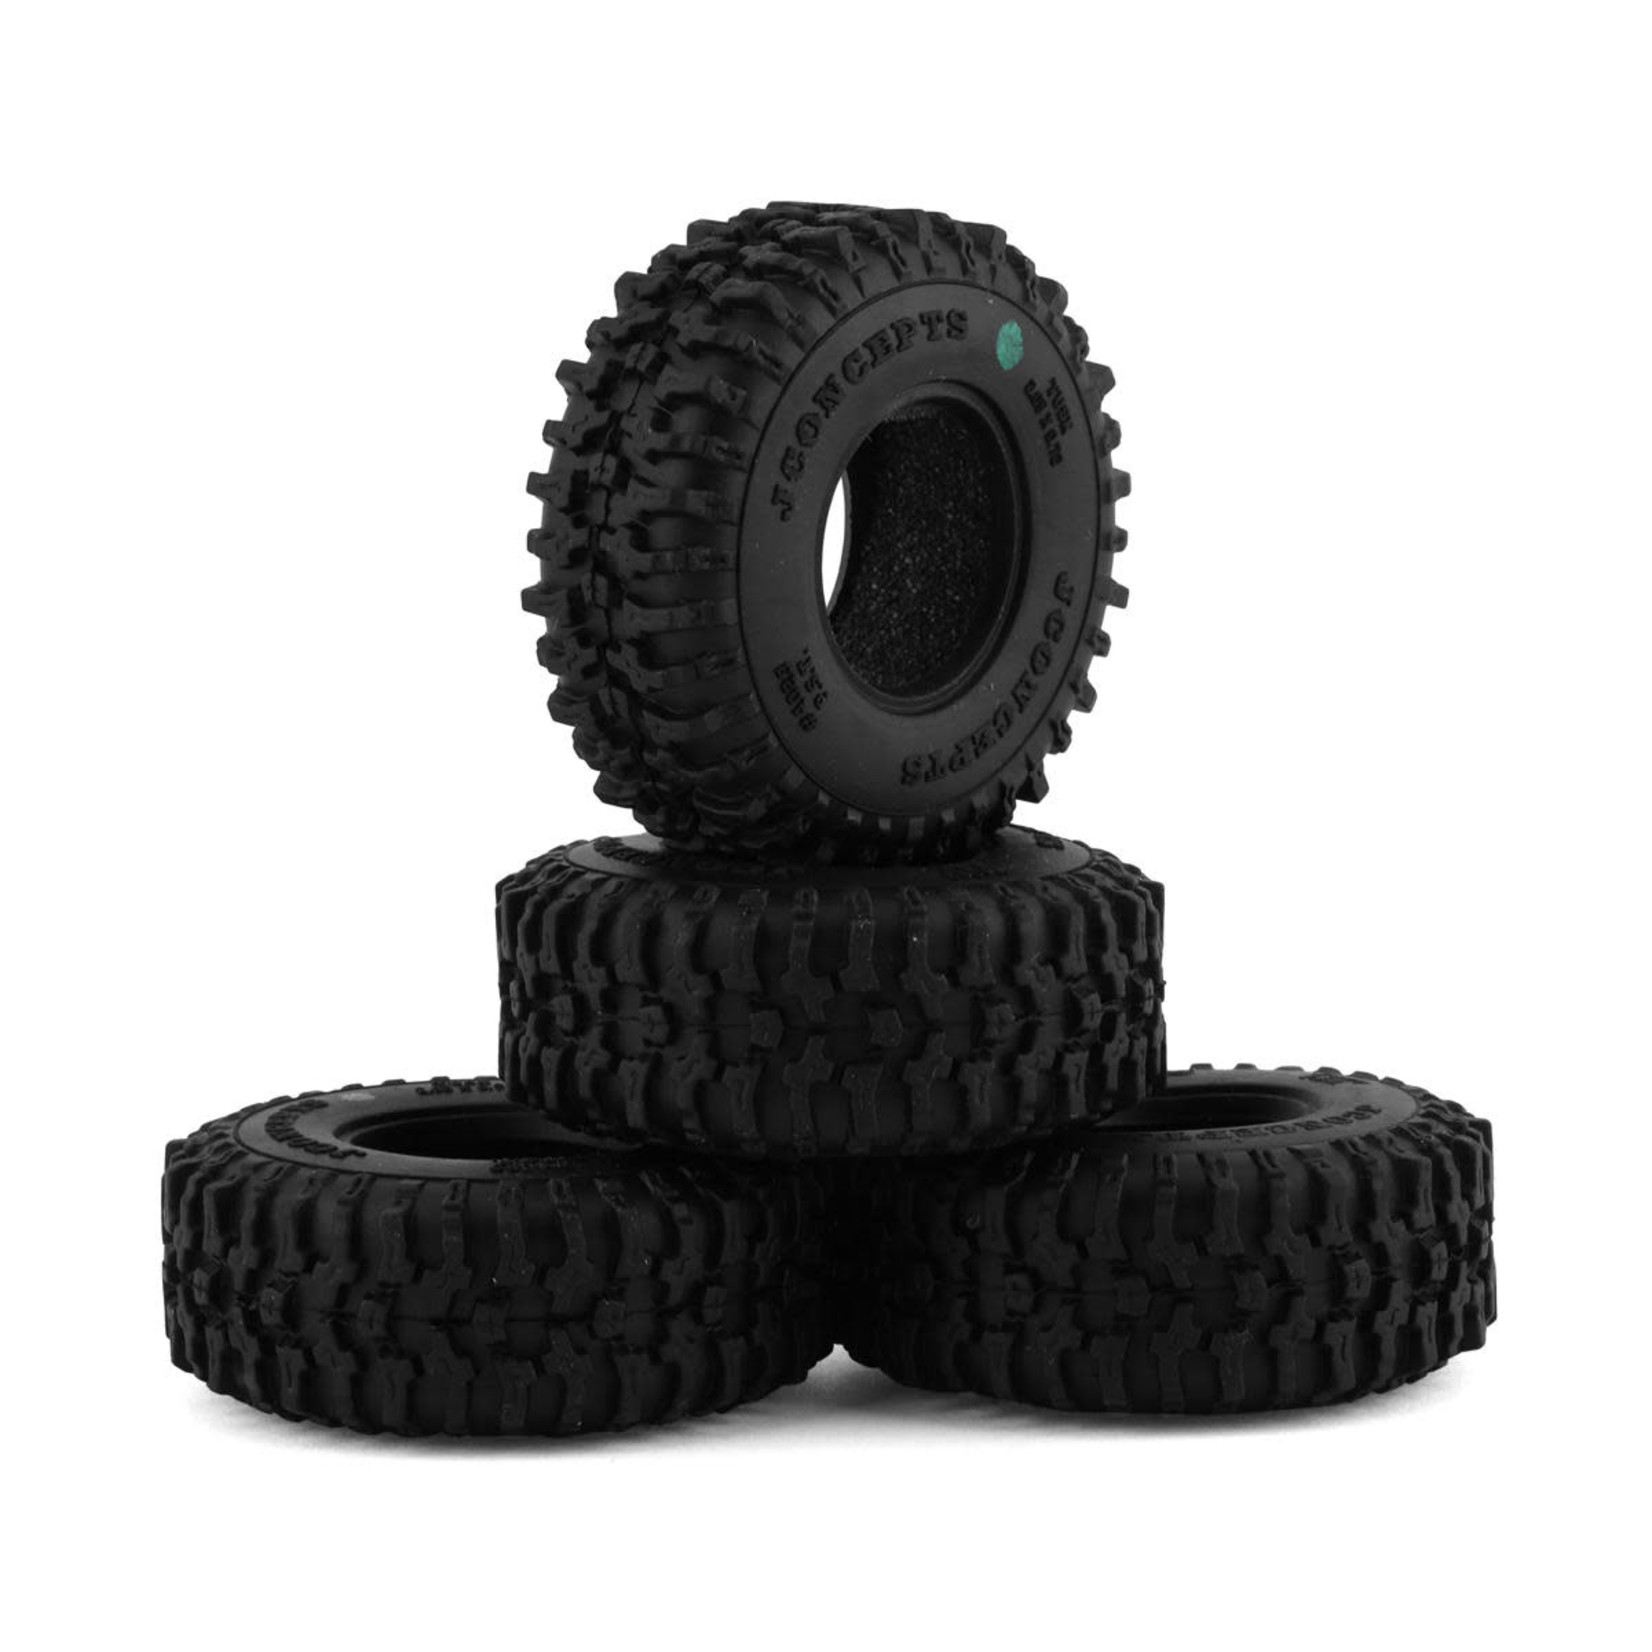 JConcepts JConcepts Tusk 1.0" Micro Crawler Tires (4) (Green) #4023-02